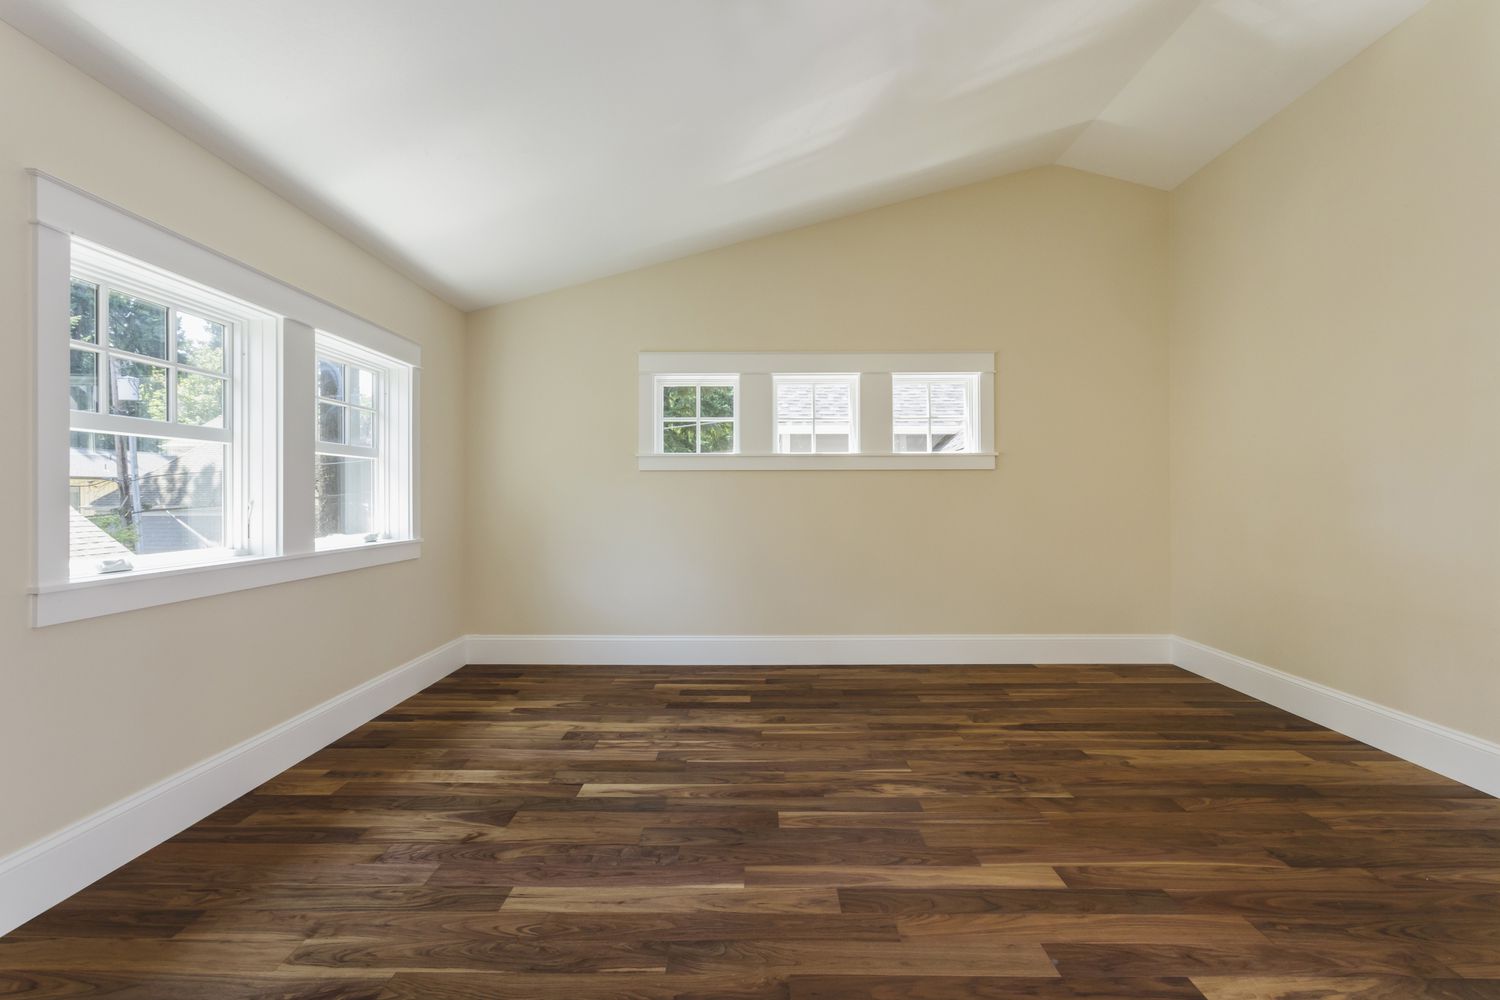 New engineered hardwood floors in an empty room